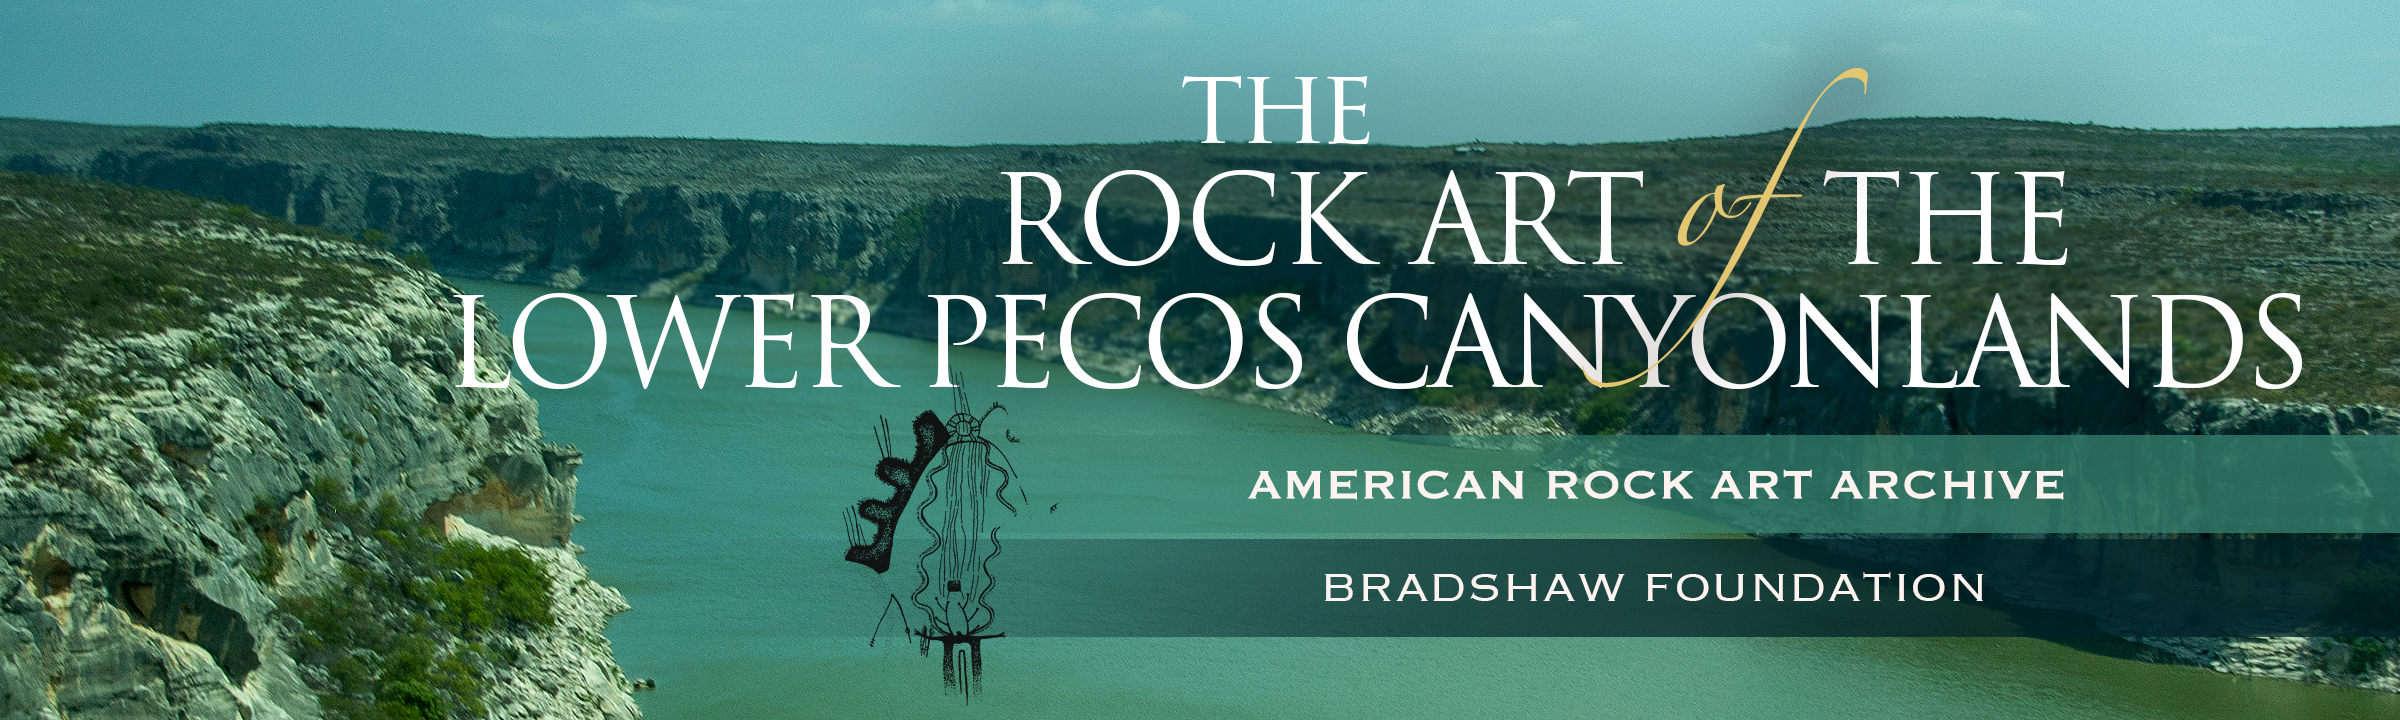 American Rock Art Archive Bradshaw Foundation United States America USA